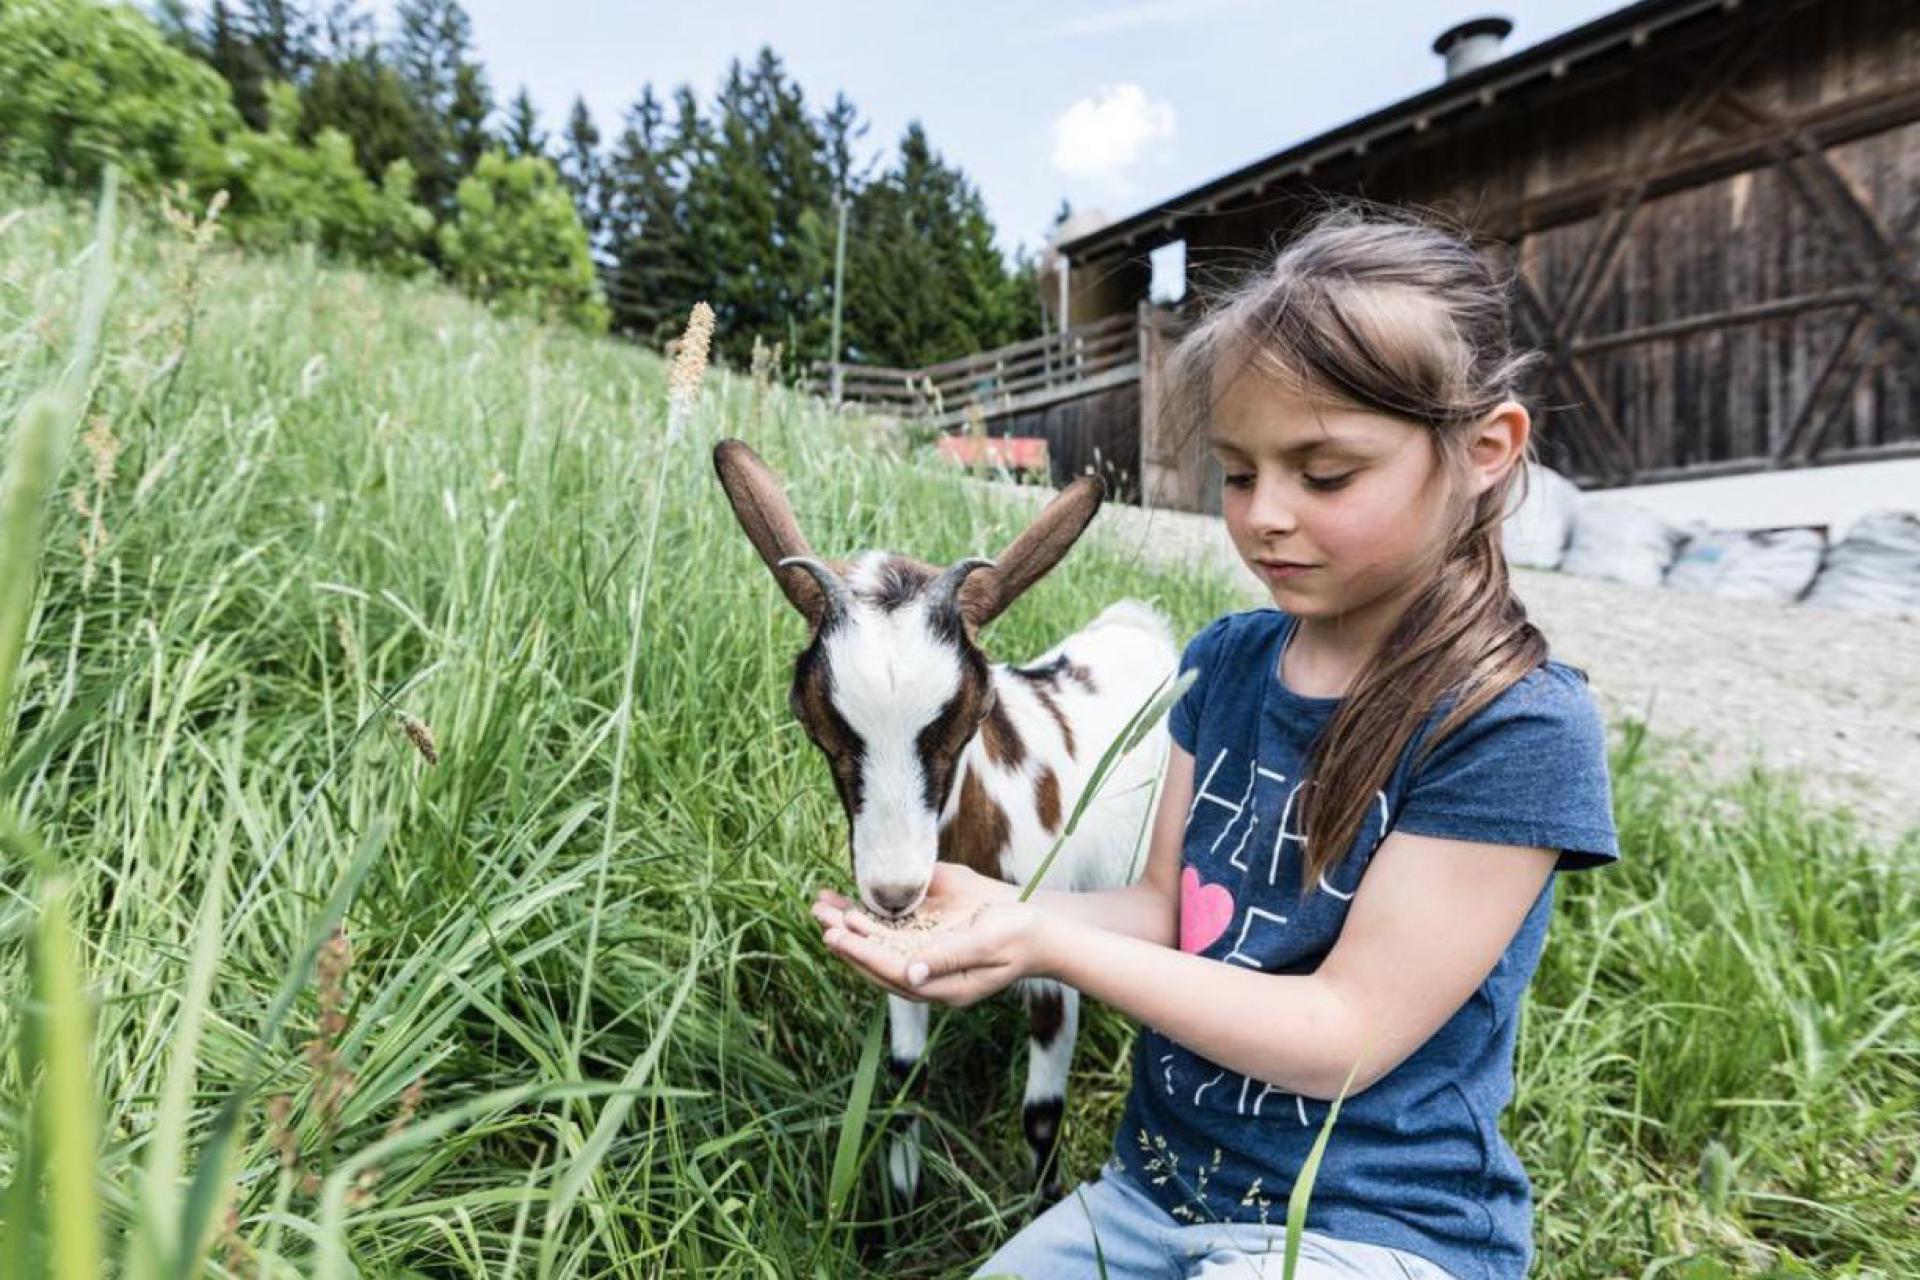 Agriturismo Dolomieten Actieve agriturismo met boerderijdieren in Trentino